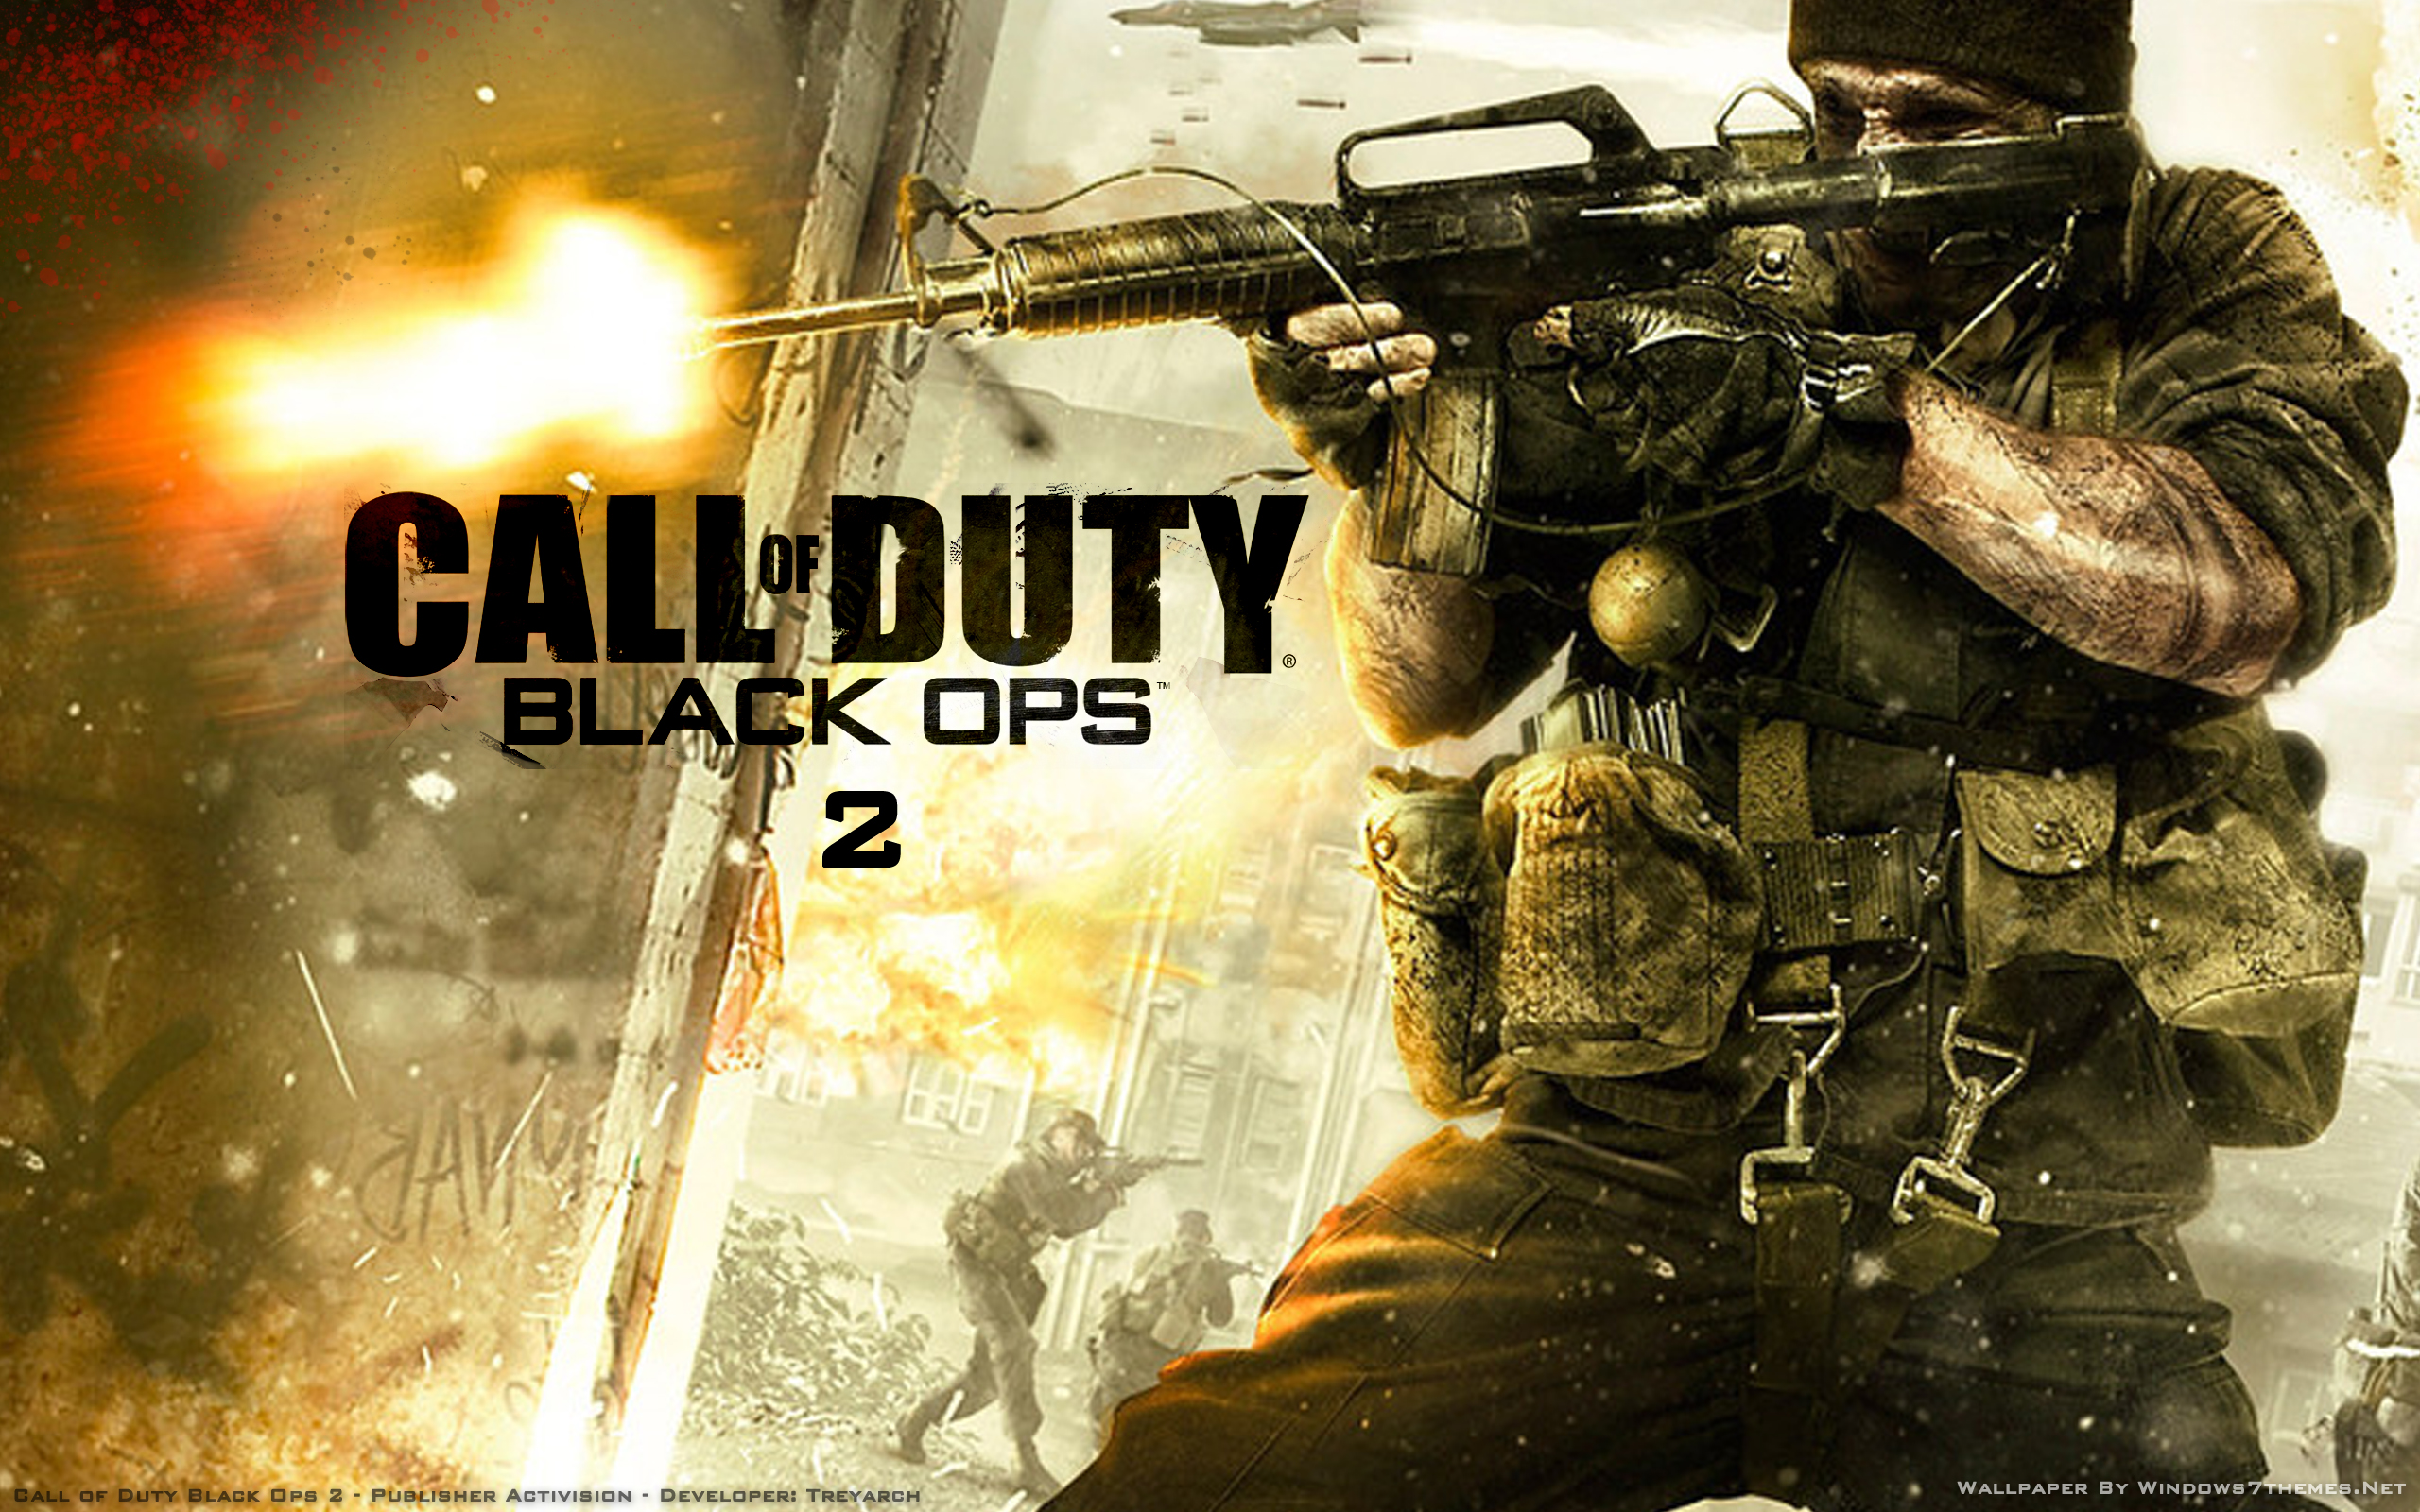 Call Of Duty Black Ops Wallpaper Full HD 1920p